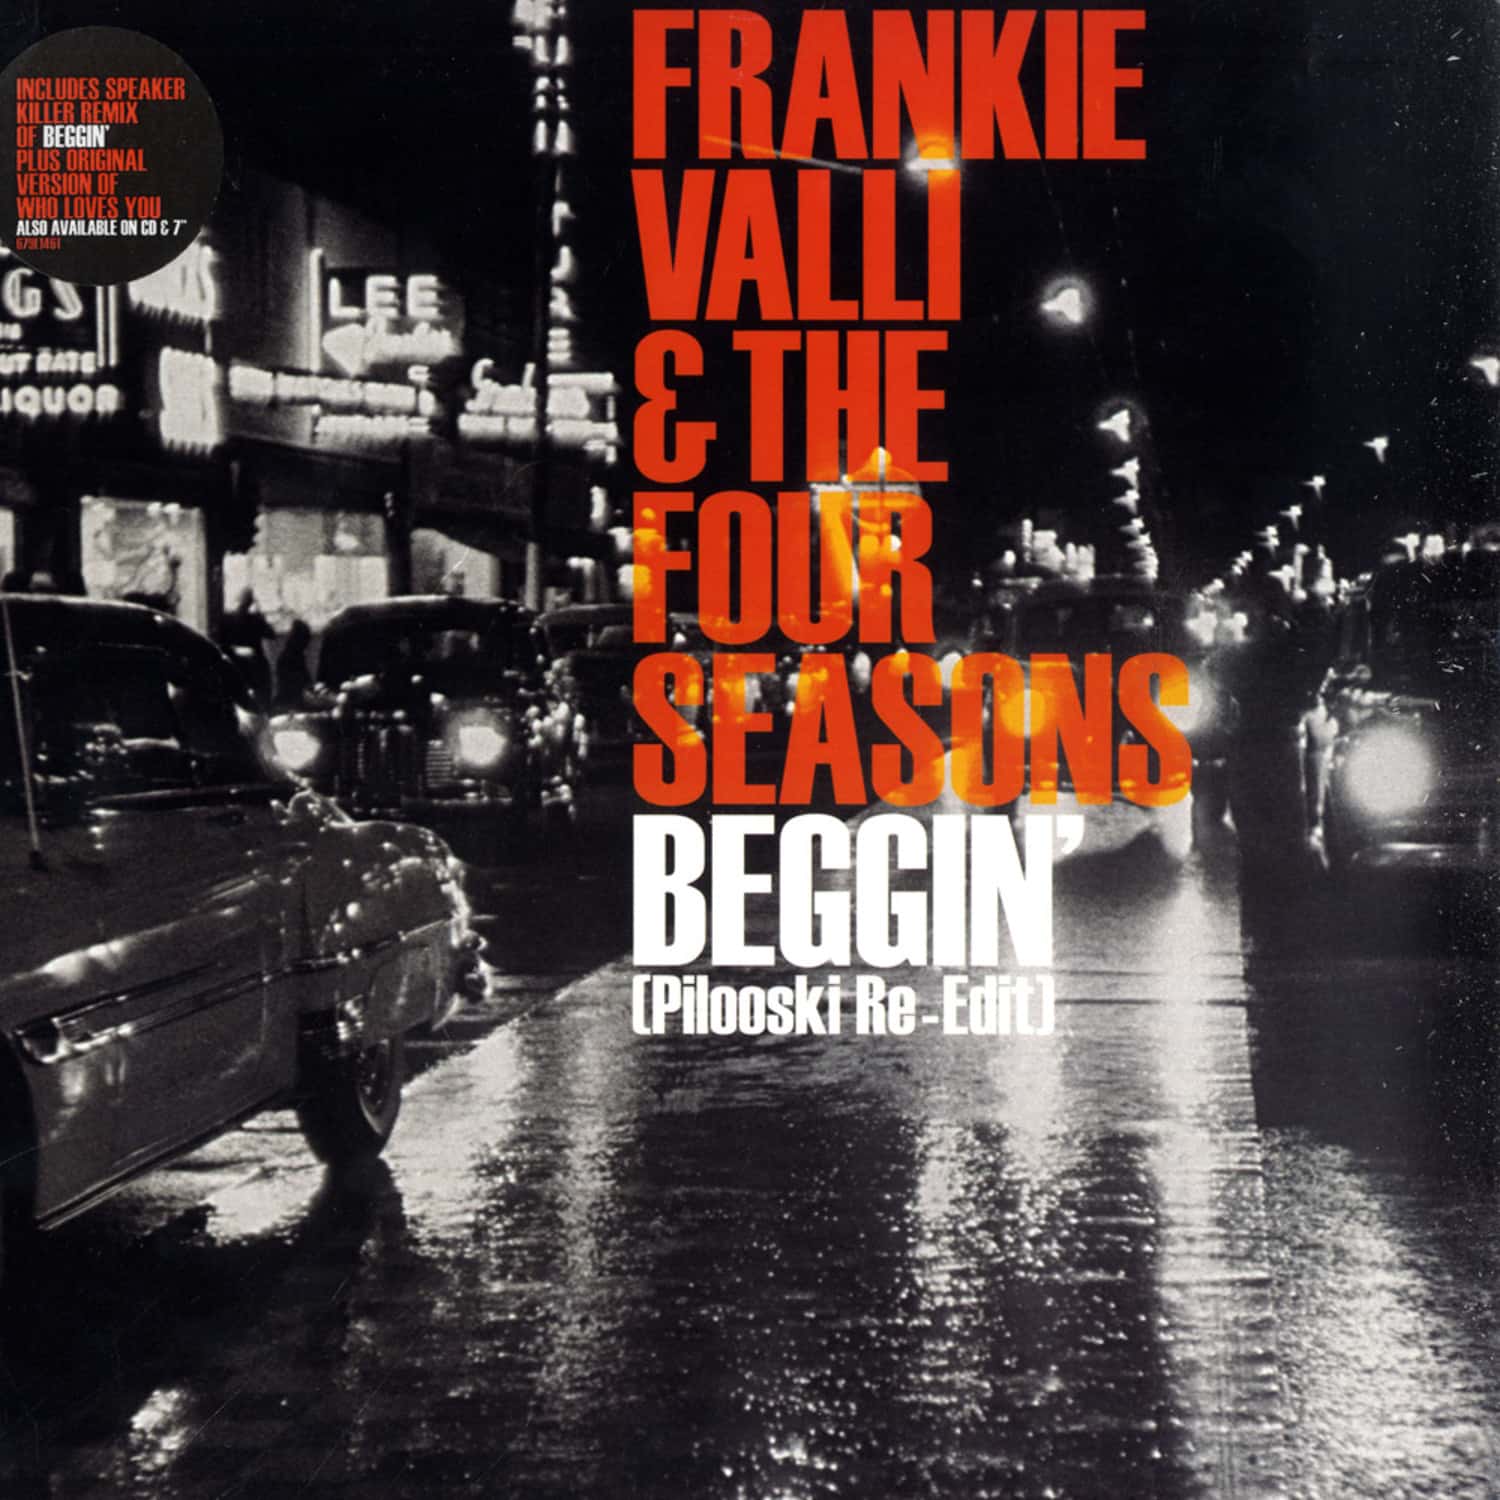 Frankie Valli - BEGGIN